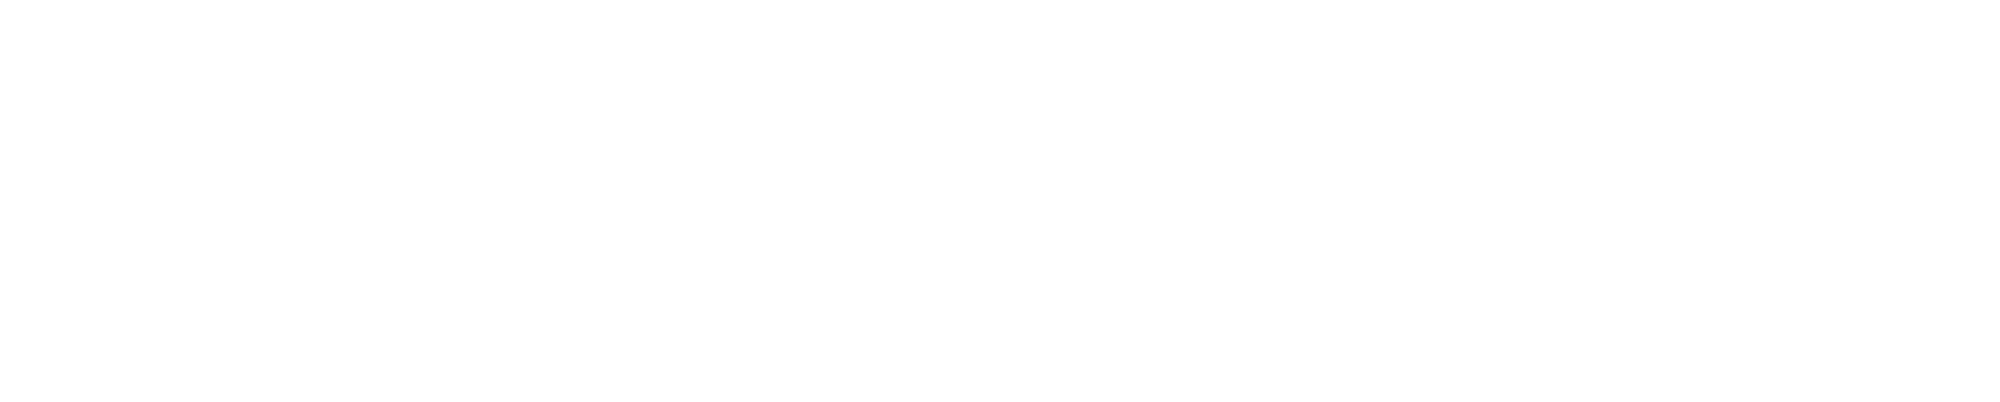 The White U Logo - The University of Chicago Library - The University of Chicago Library